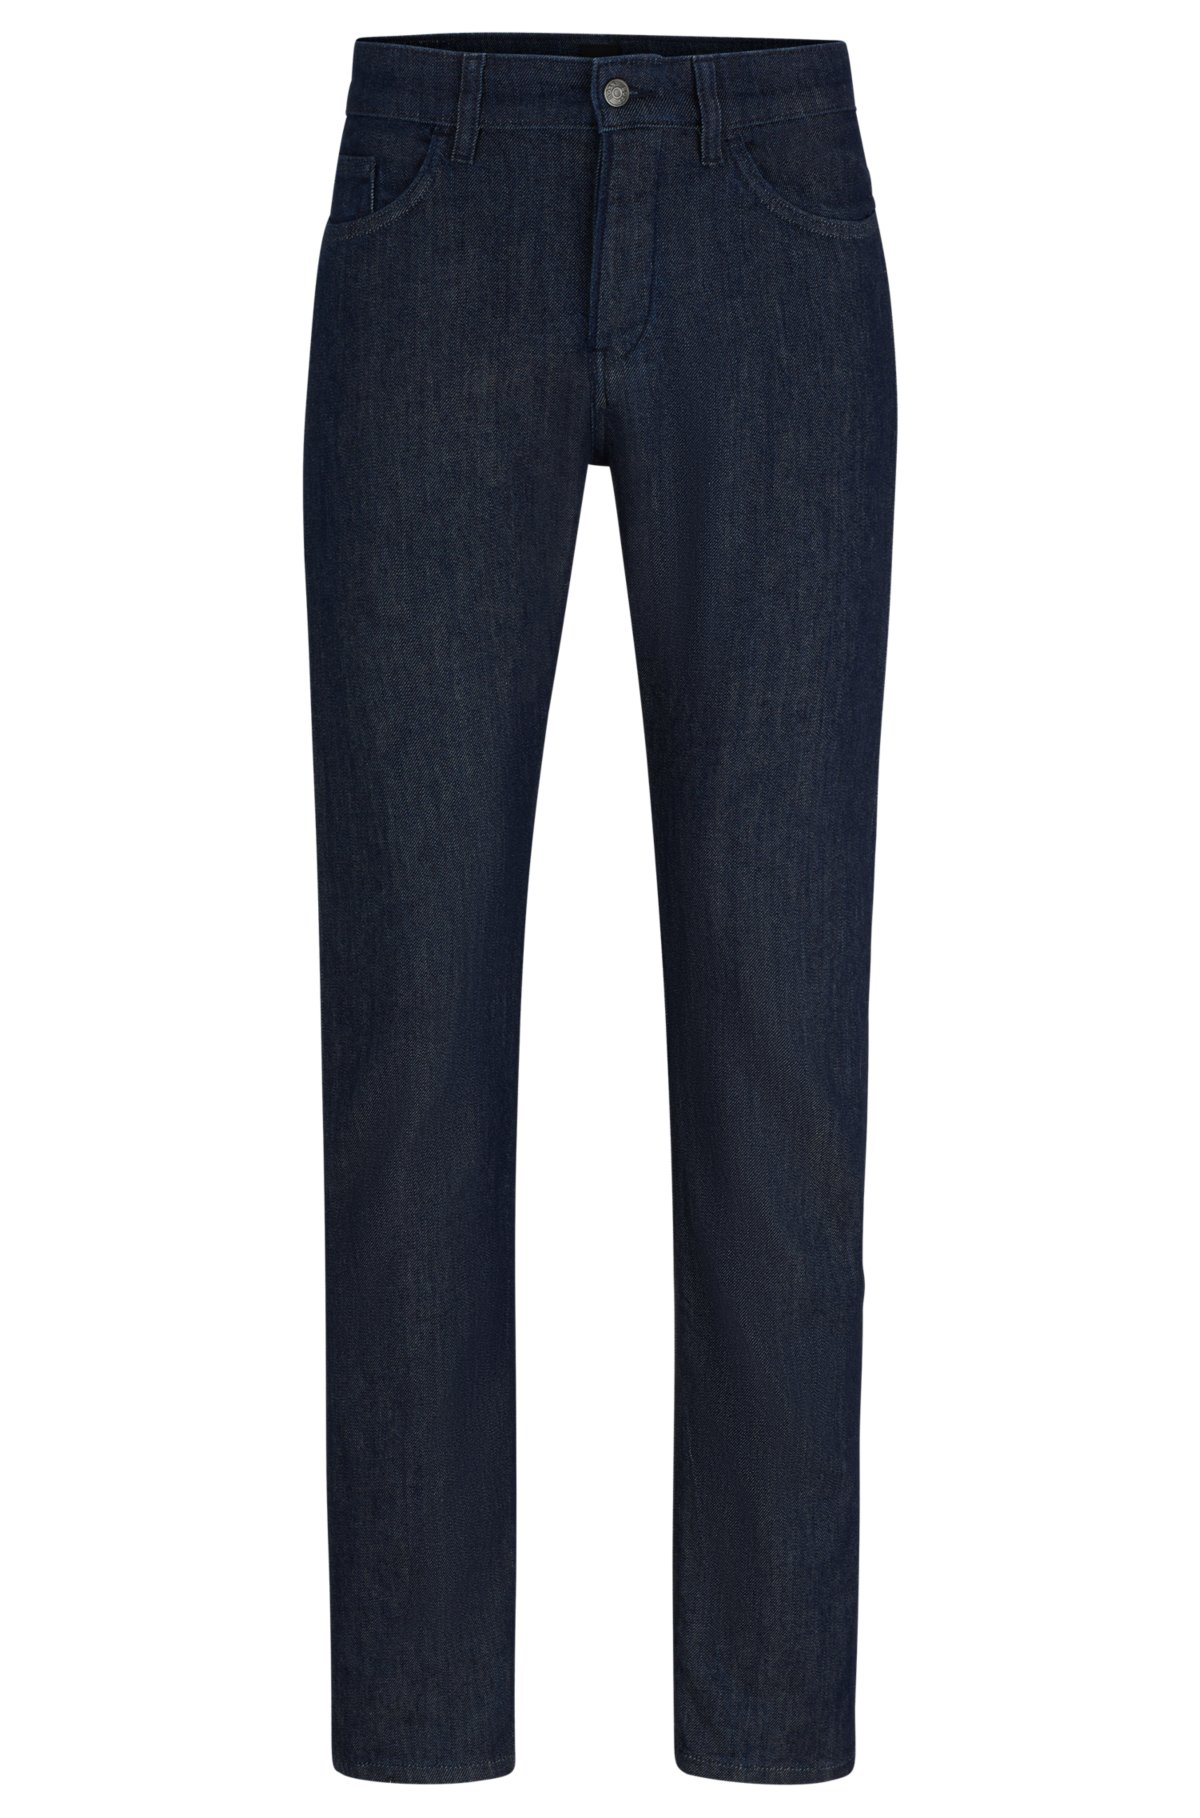 BOSS - Slim-fit jeans in blue mechanical-stretch denim